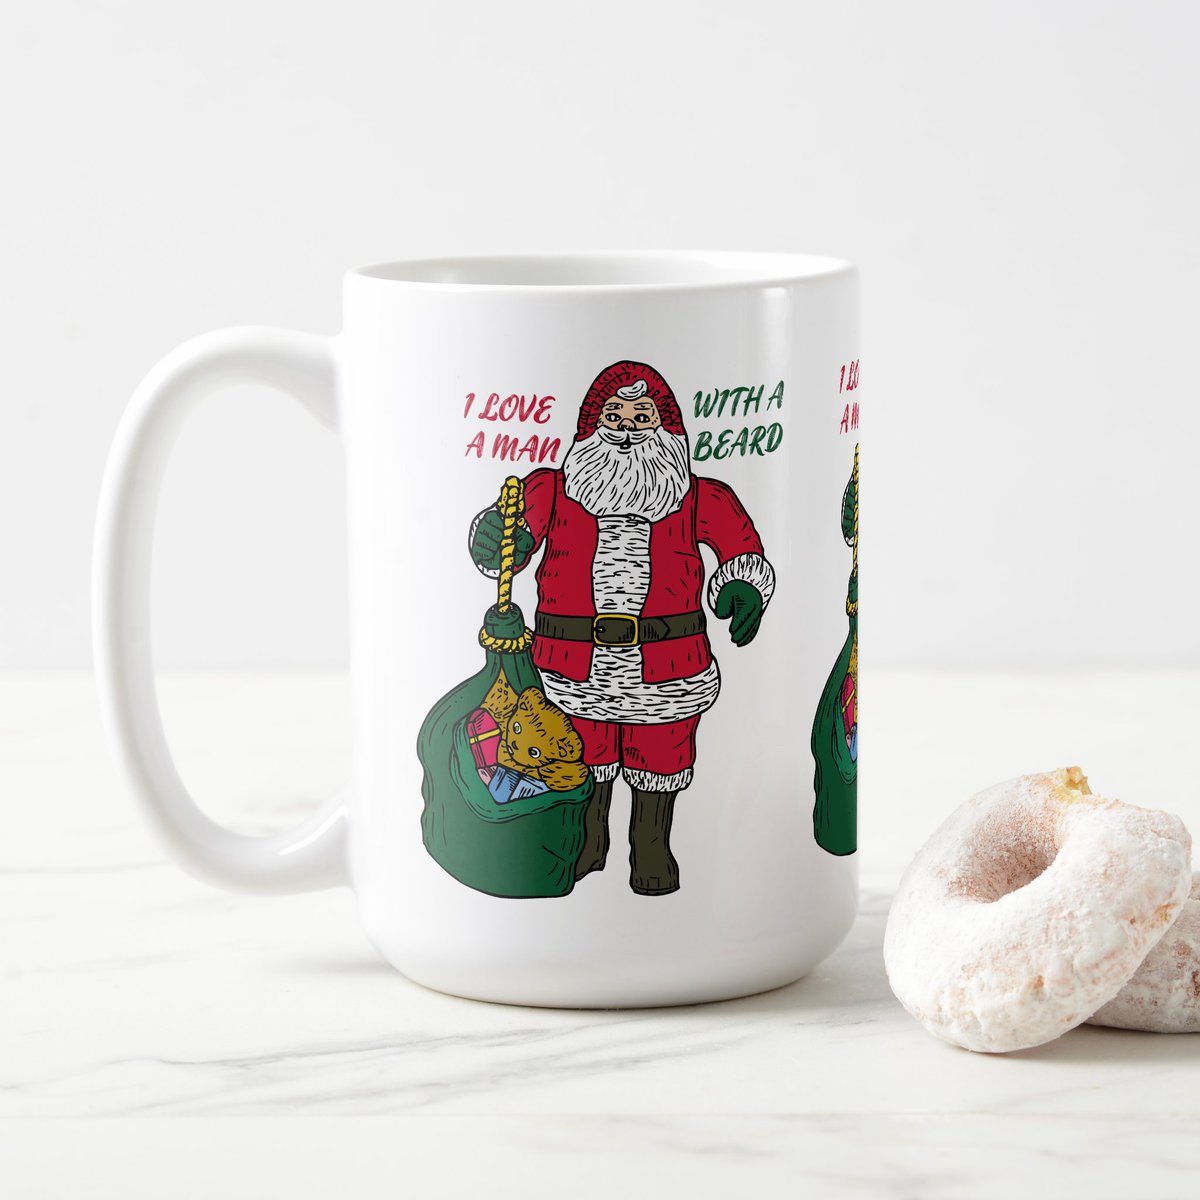 ☕️ Sip in style this holiday season with our Christmas Themed Mug! 📷  zazzle.com/christmas_them…
#ChristmasGift #coffeemug #coffeelovers #ChristmasGiftIdeas #HolidayMug #ChristmasCheer